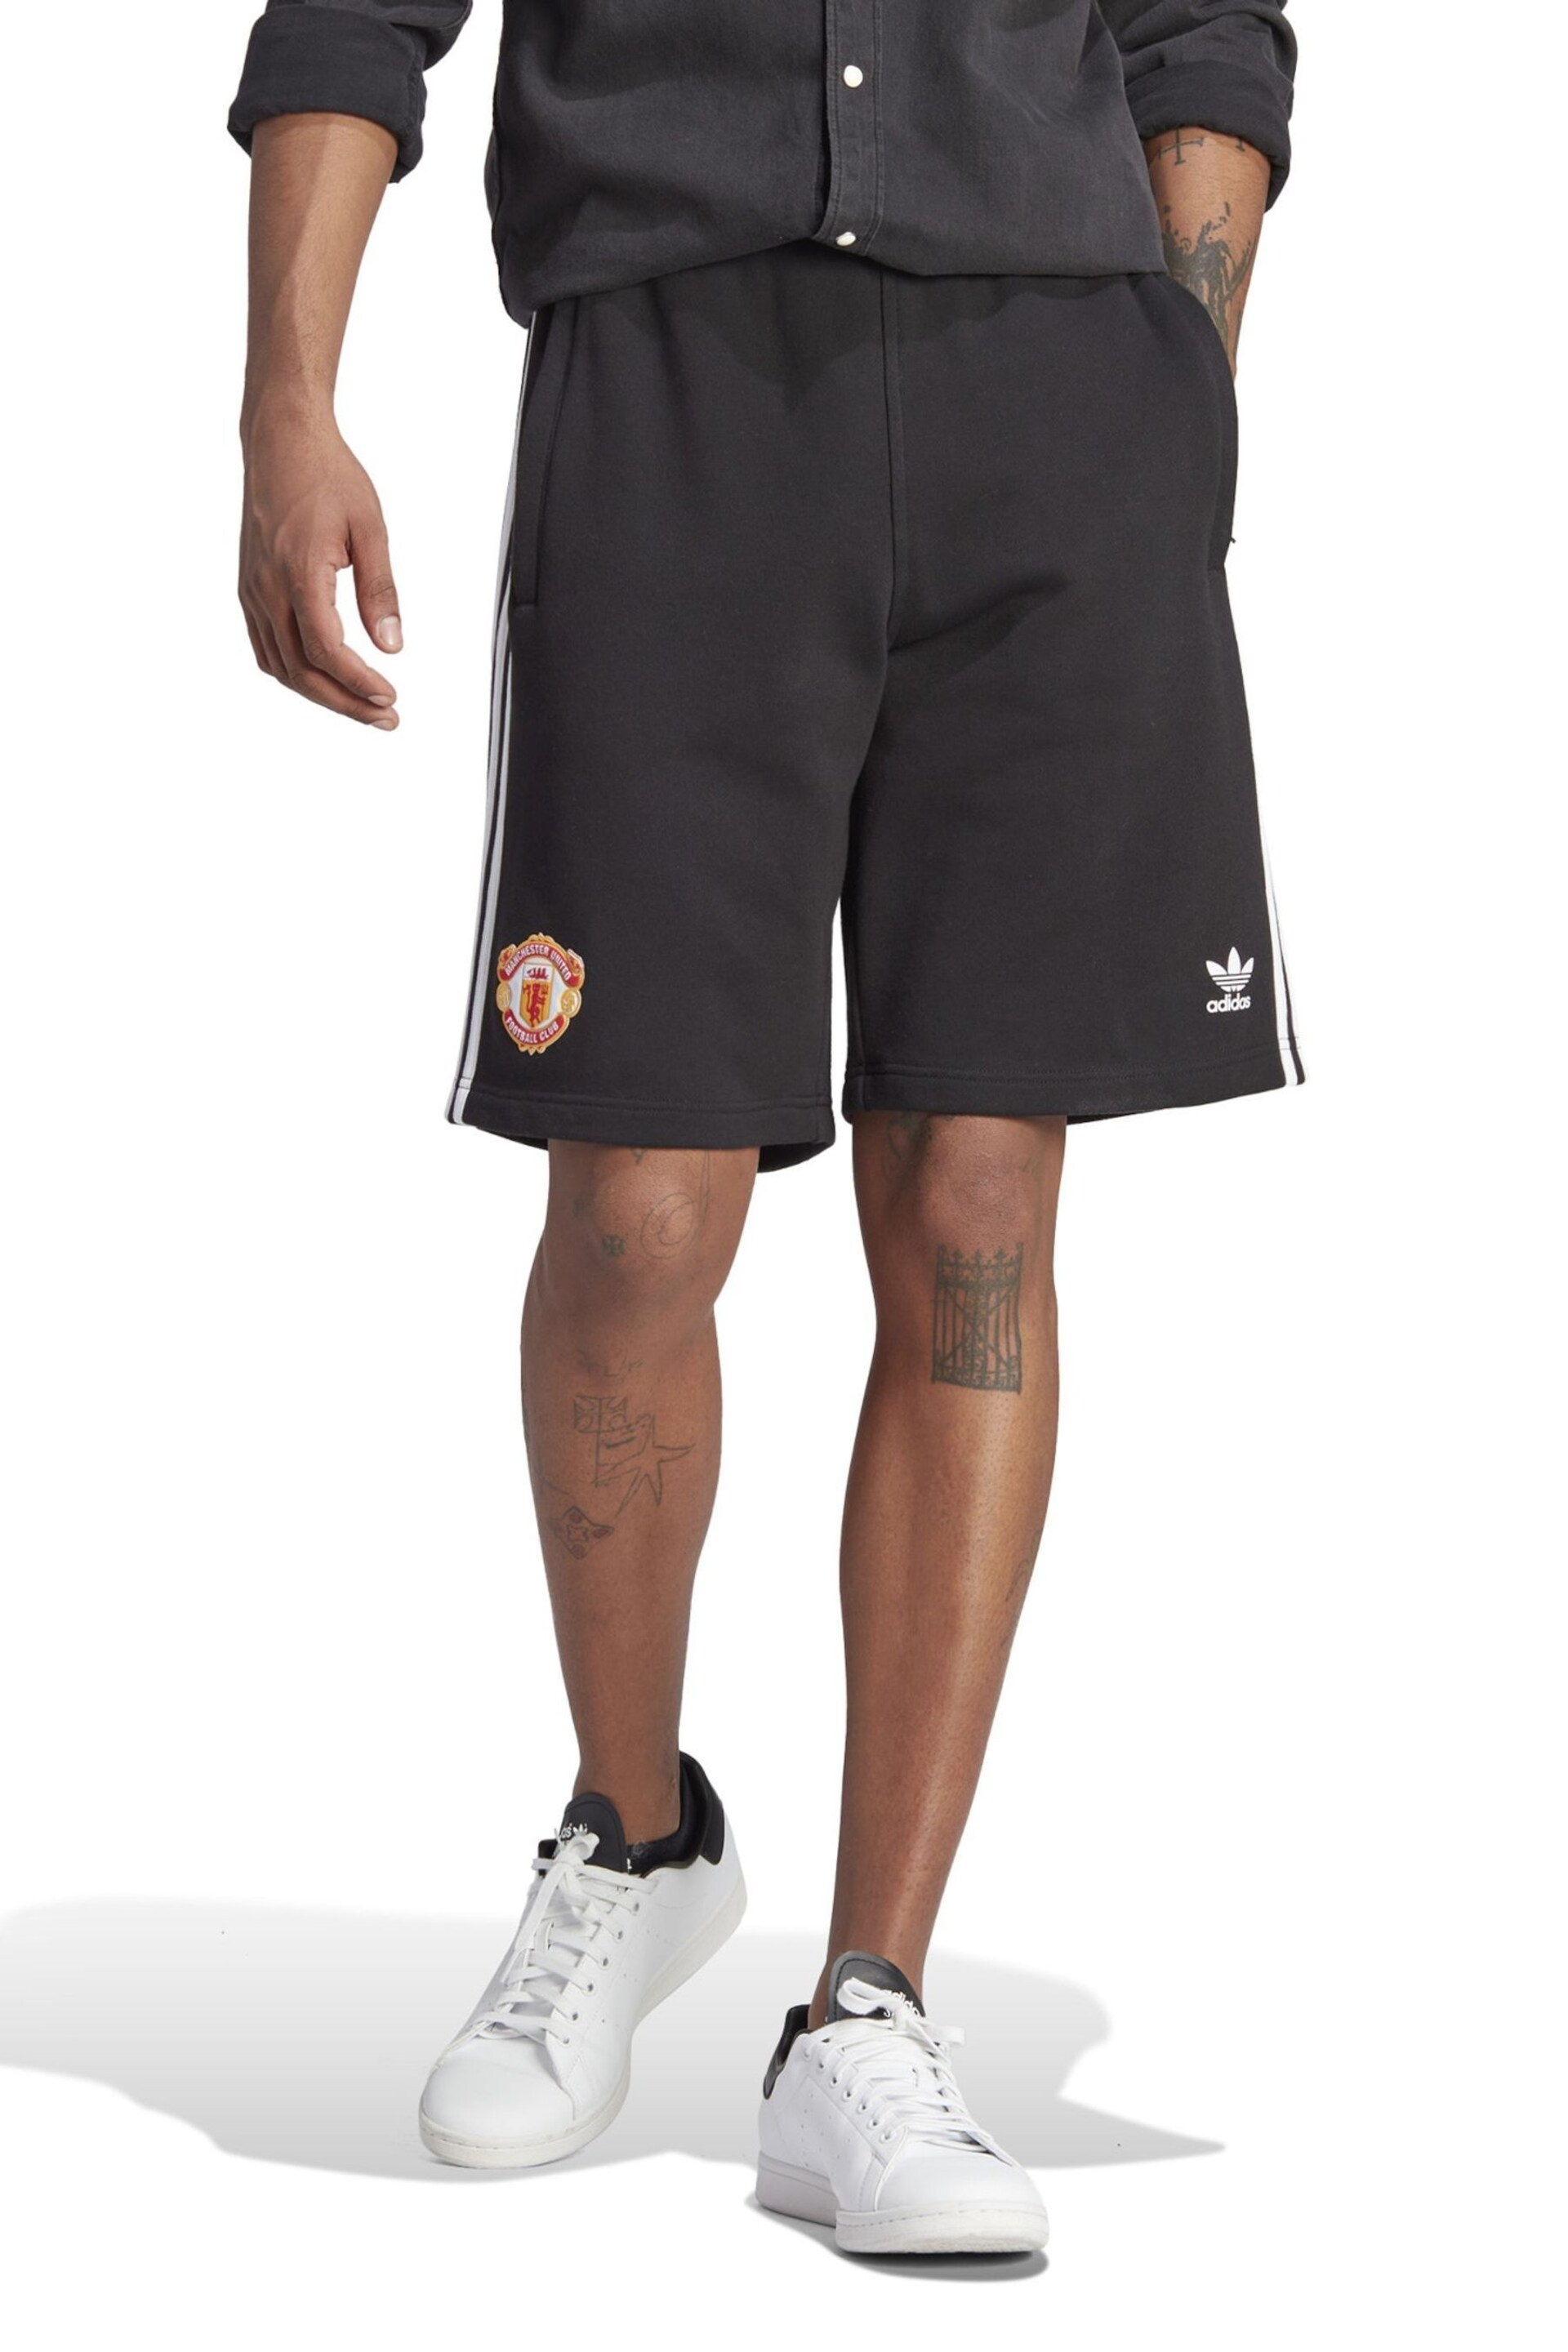 adidas Black Manchester United x Originals Shorts - Image 1 of 5